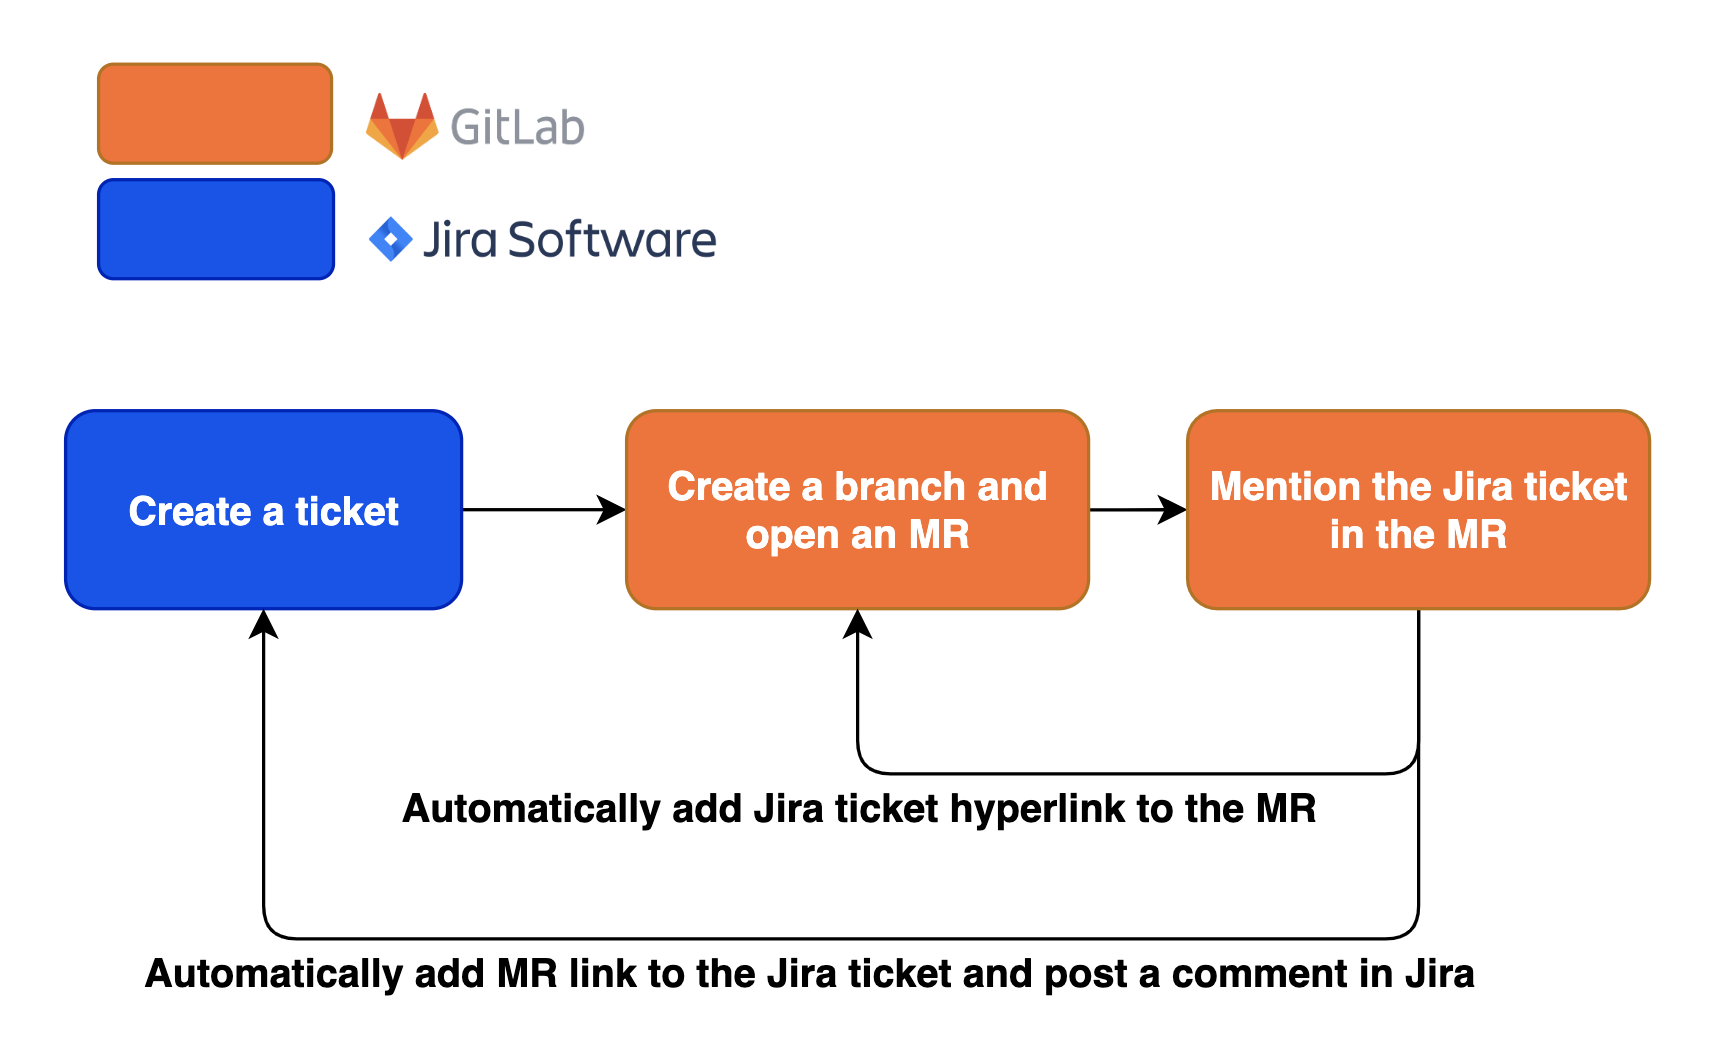 Jira/Gitlab automation flow